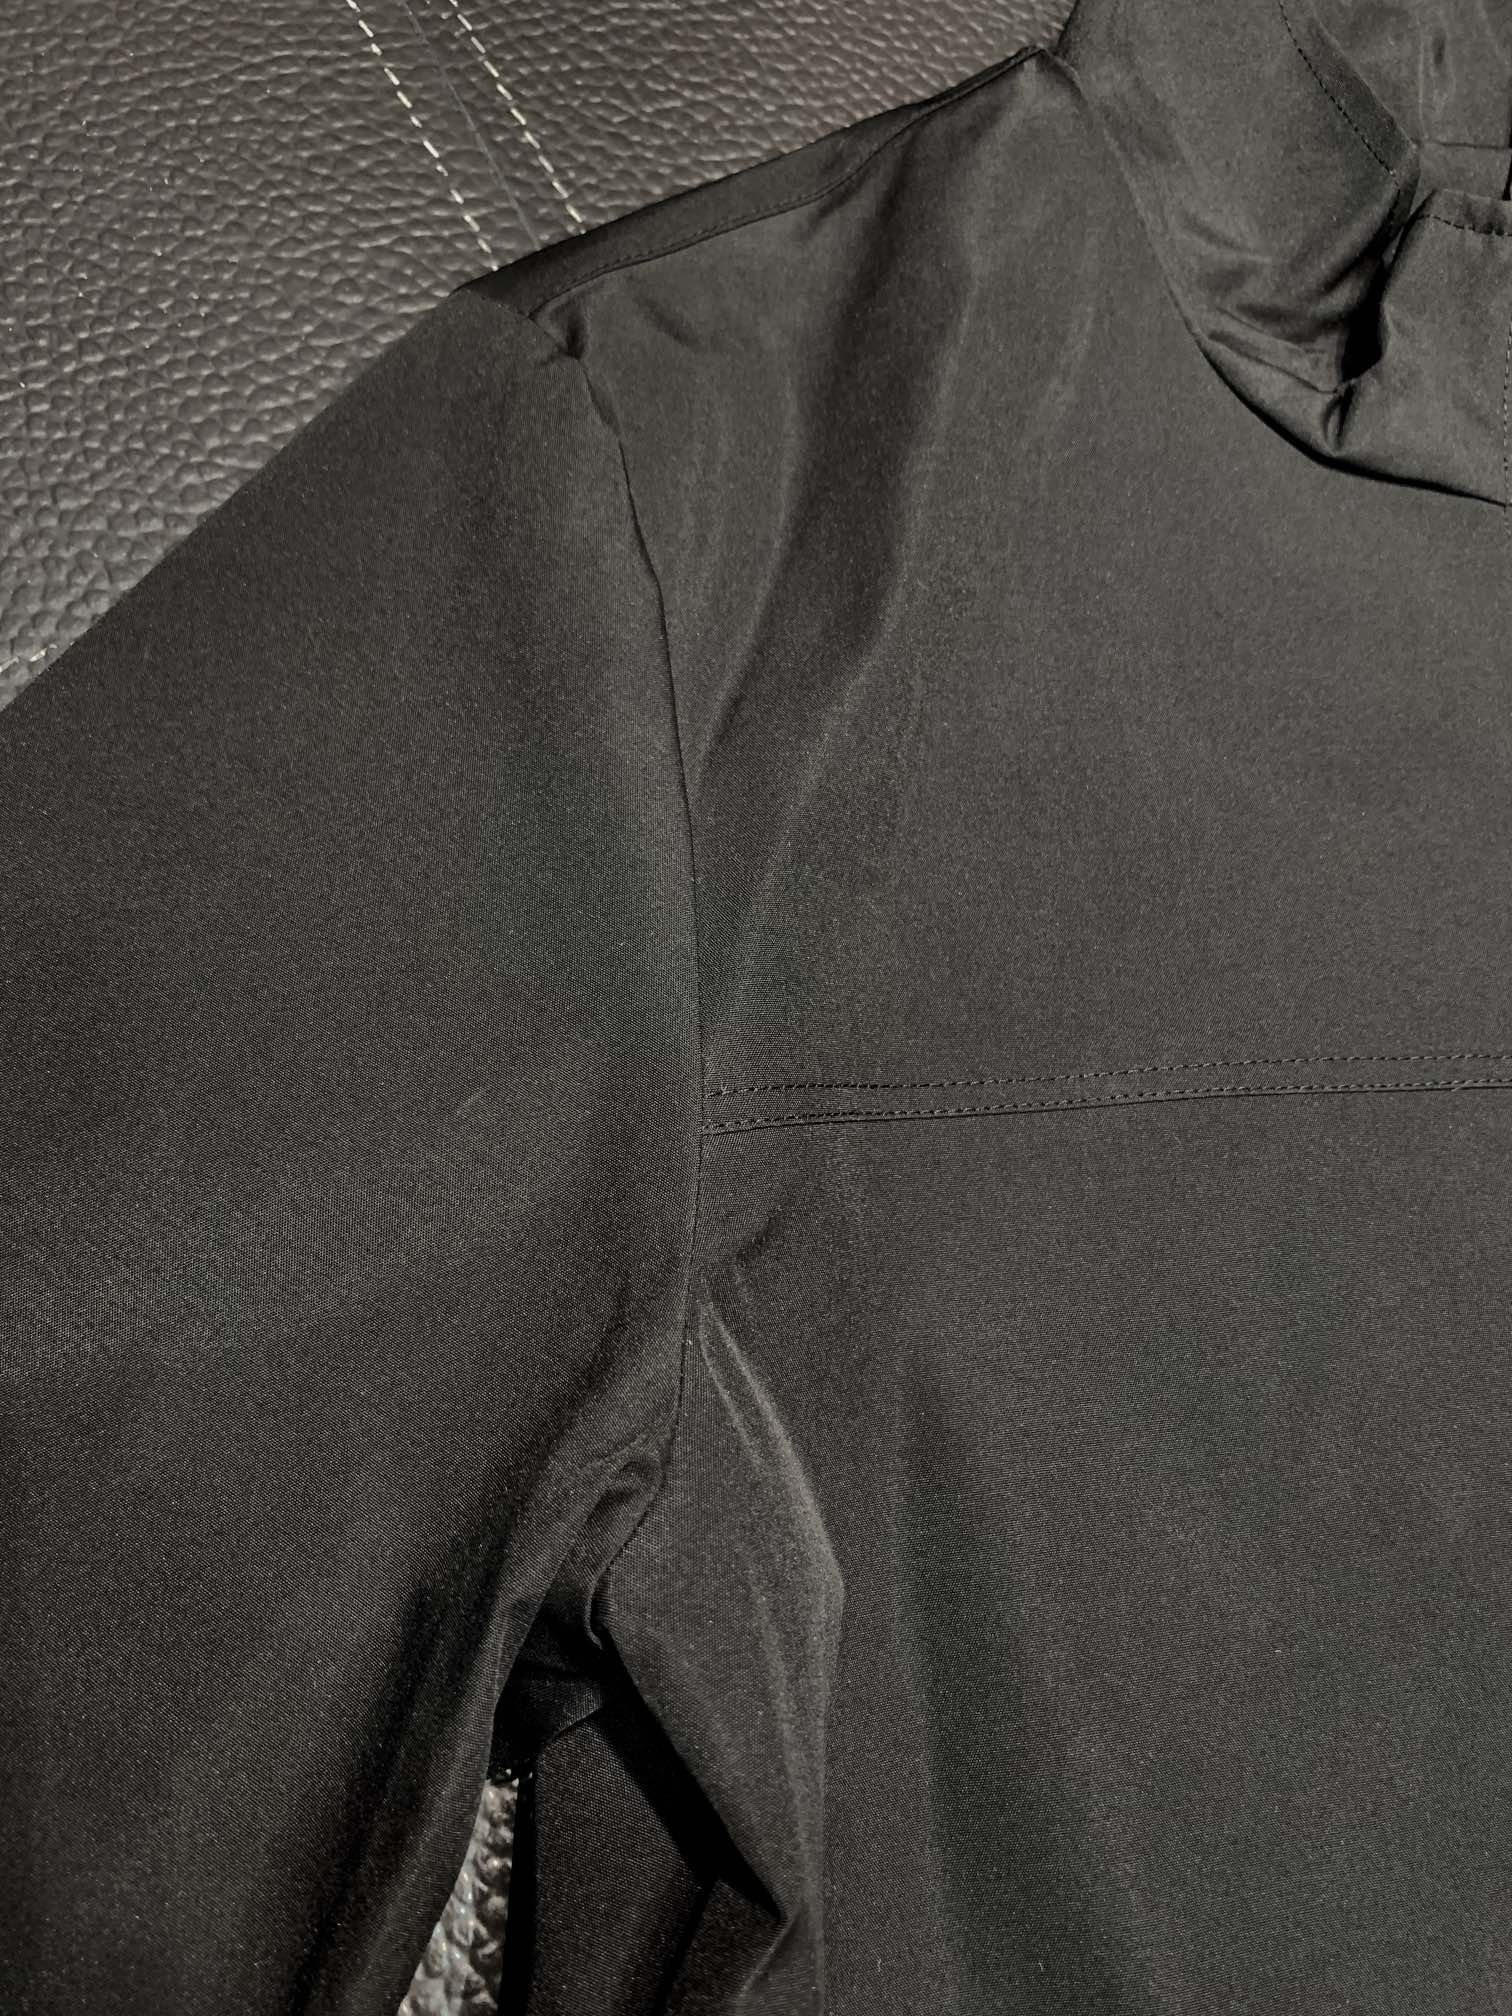 Prada普拉达独家专供最新四季时尚立领夹克休闲经典拉链外套经典设计感与颜值爆棚的外套品质更是无法挑剔品